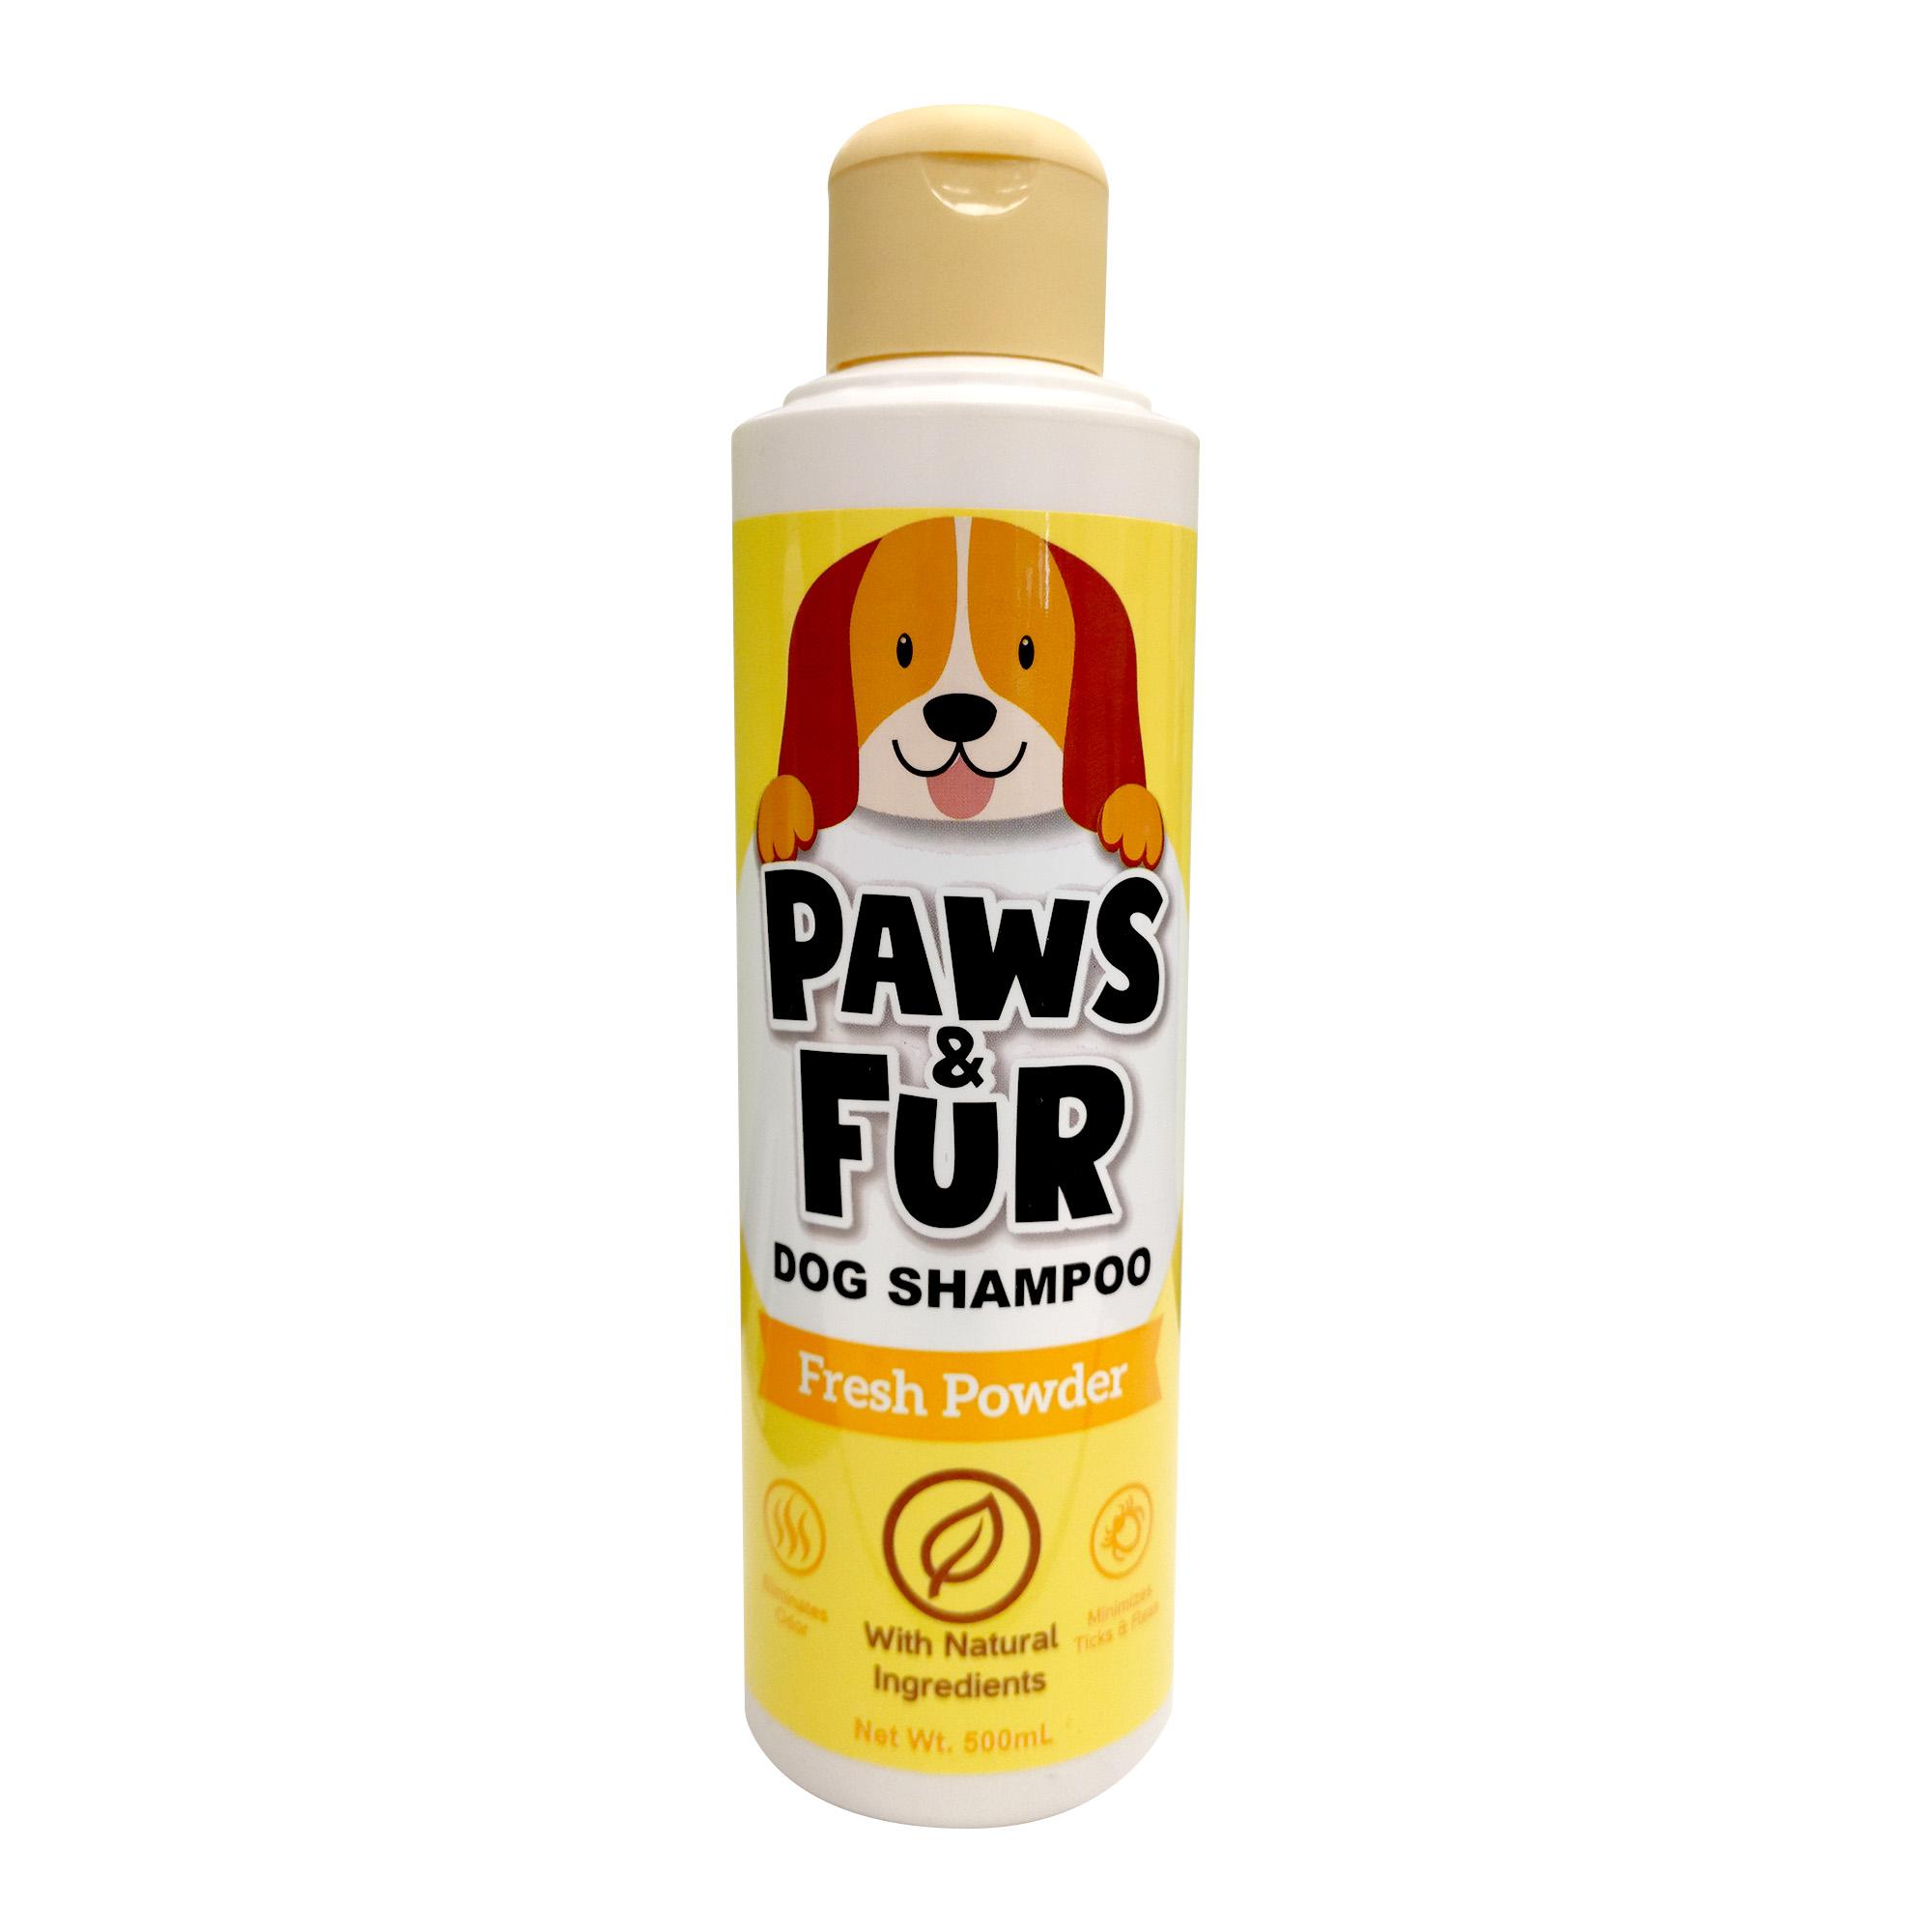 Paws & Fur Shampoo for Dogs